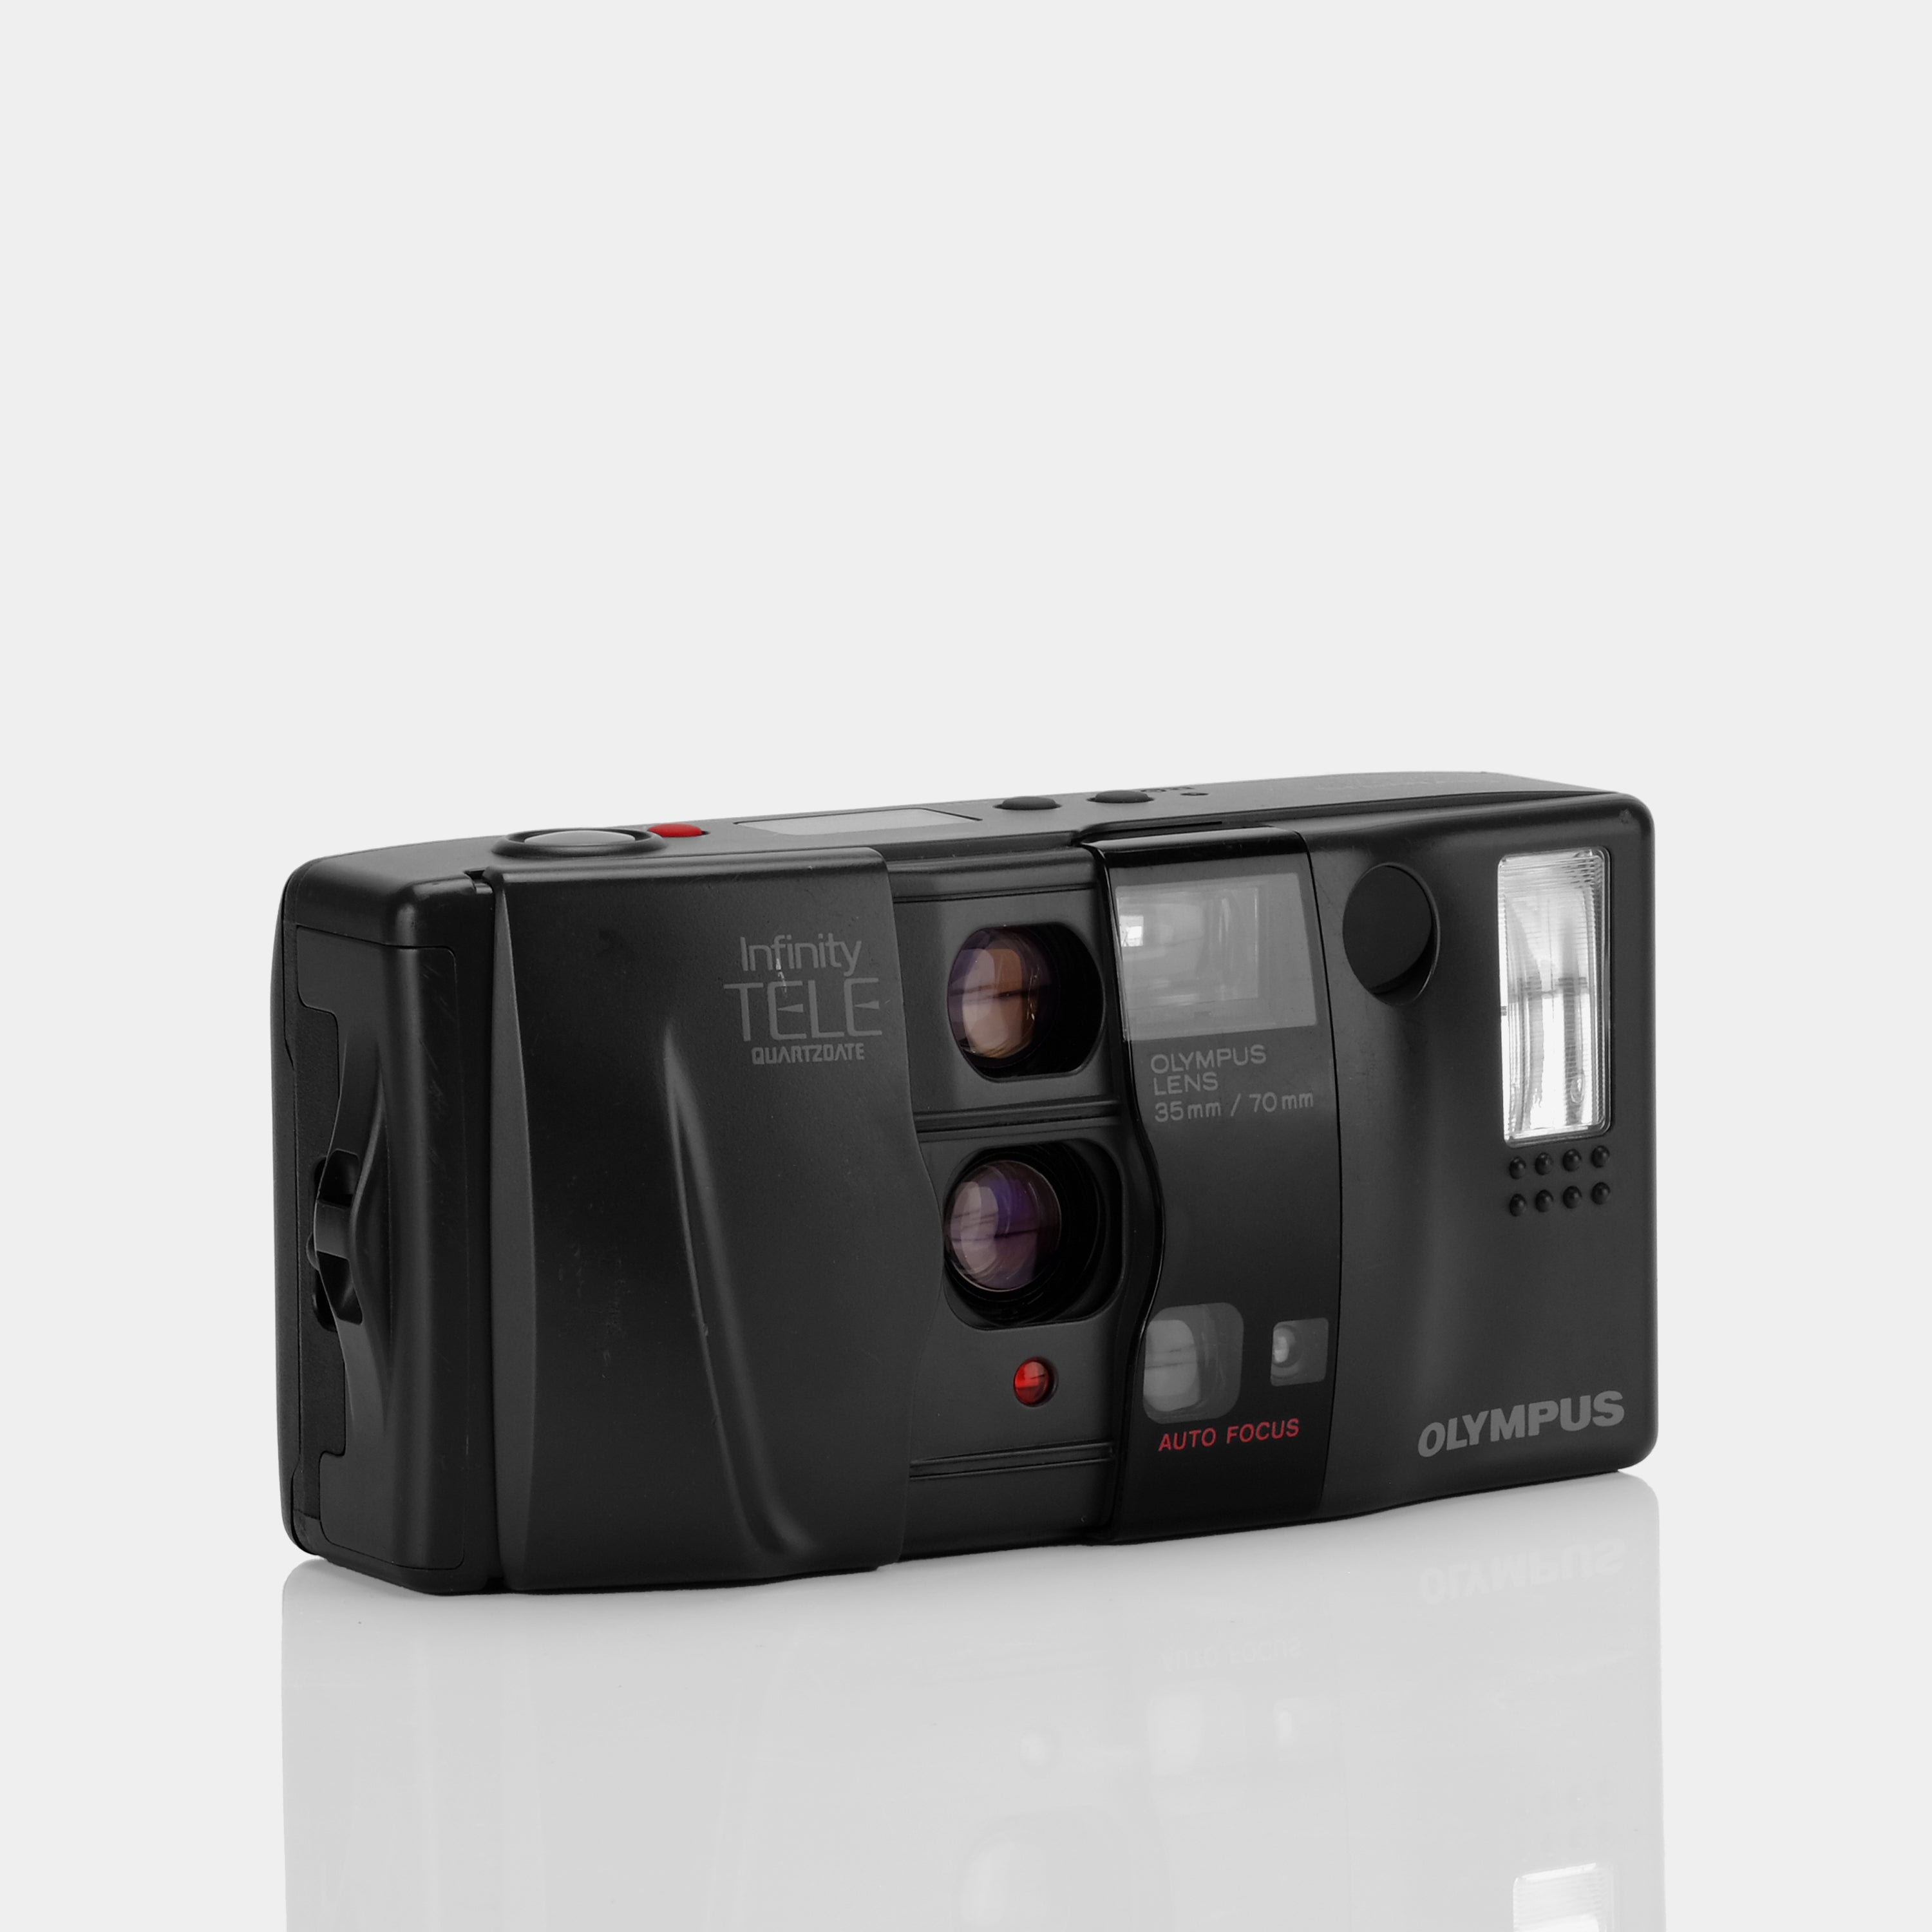 Olympus Infinity Tele Autofocus Point and Shoot 35mm Film Camera